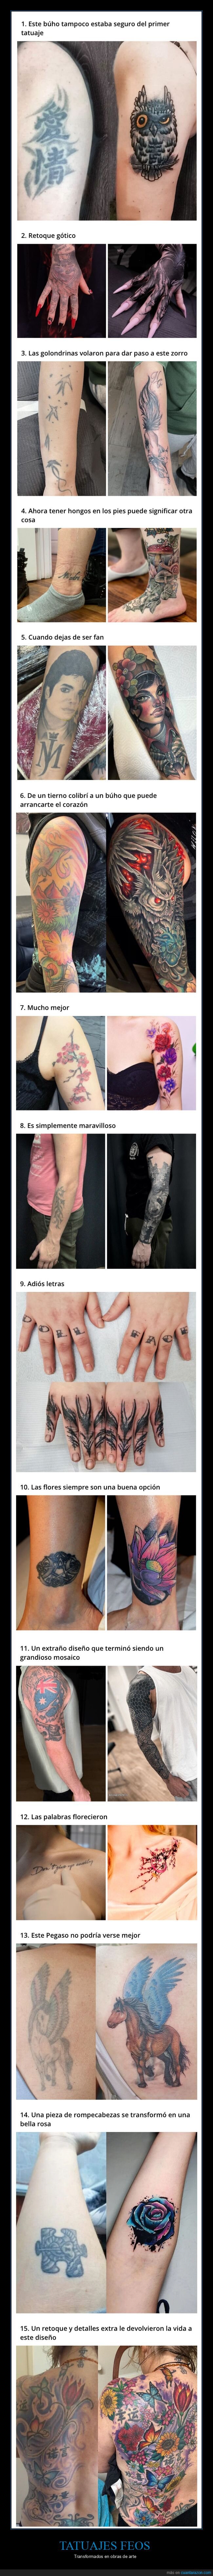 antes,arreglados,después,feos,tatuajes